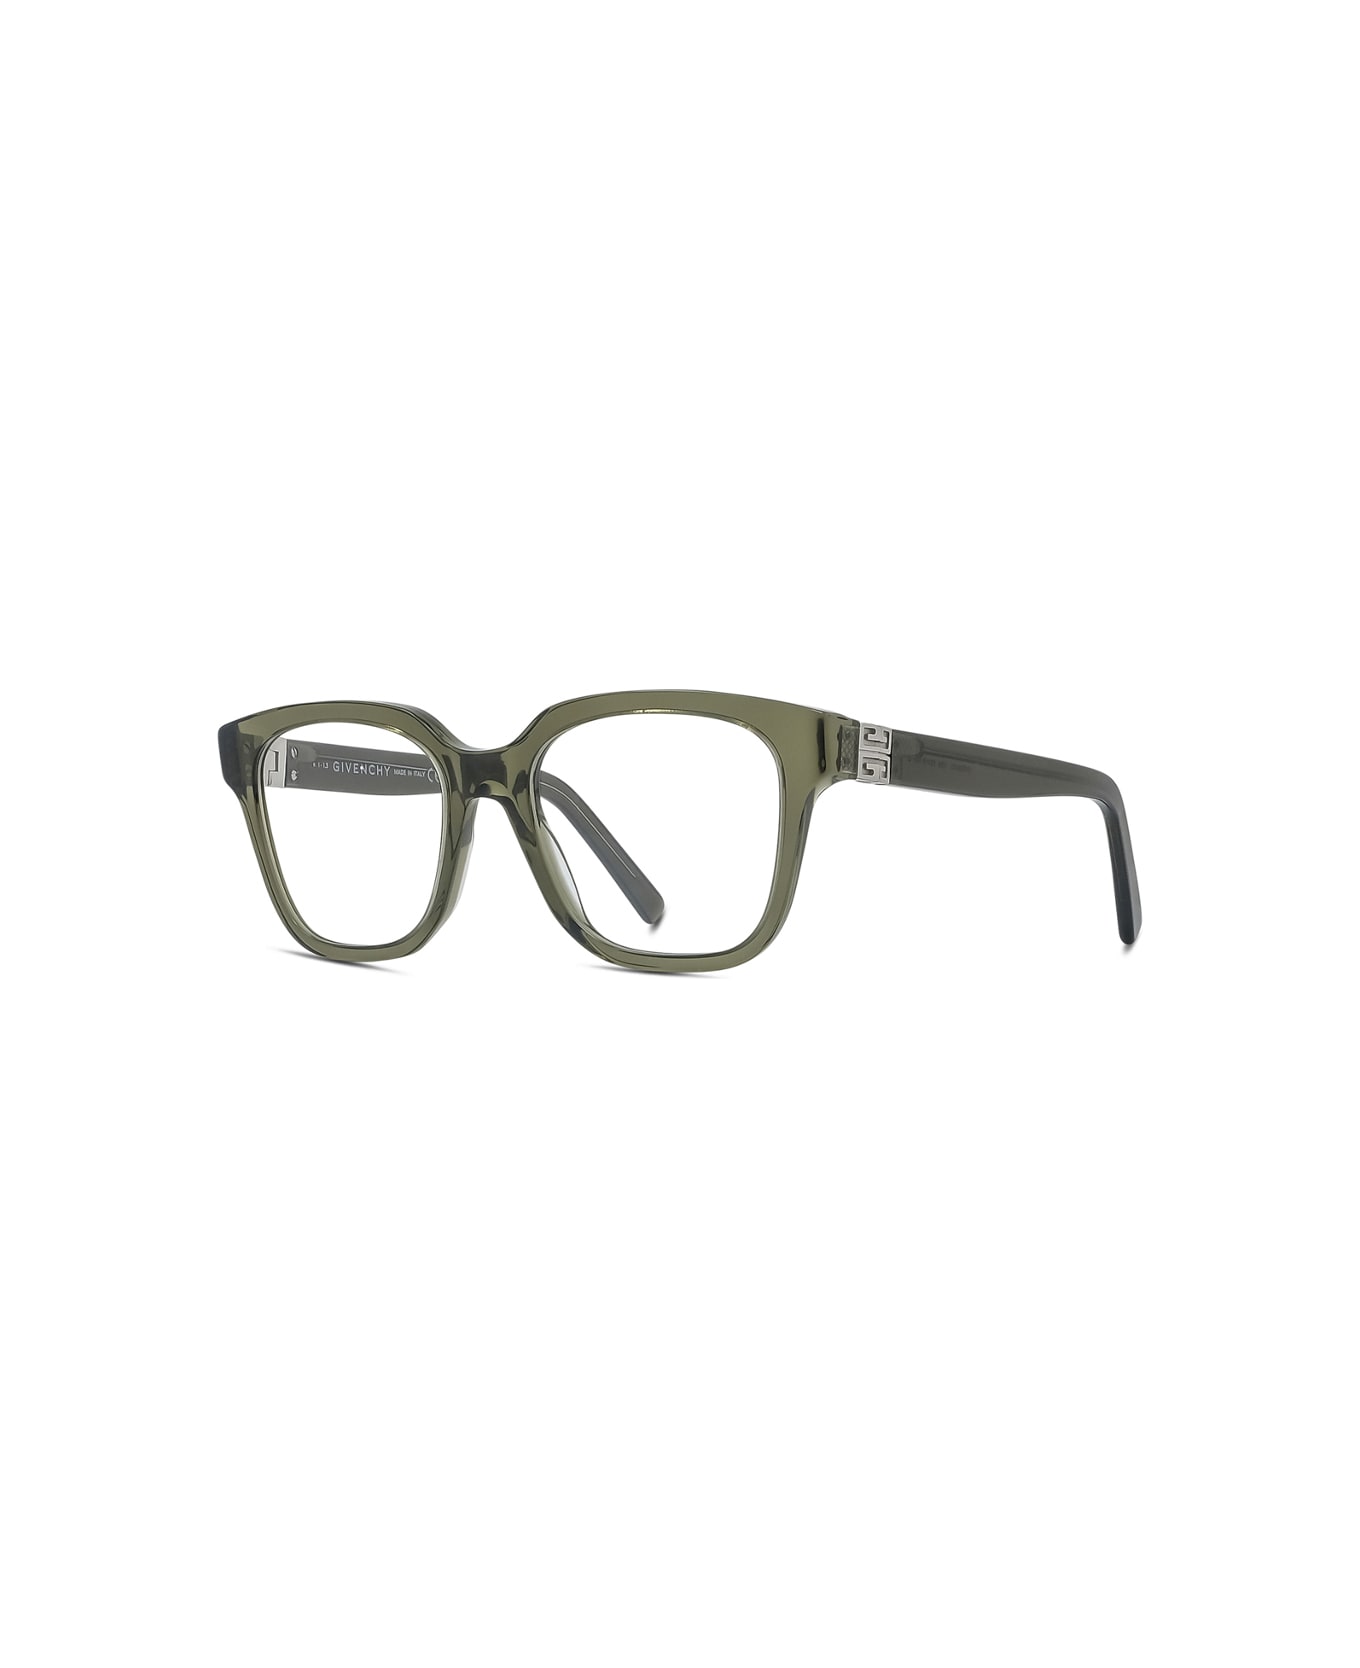 Givenchy Eyewear Gv50040i Glasses - Verde oliva